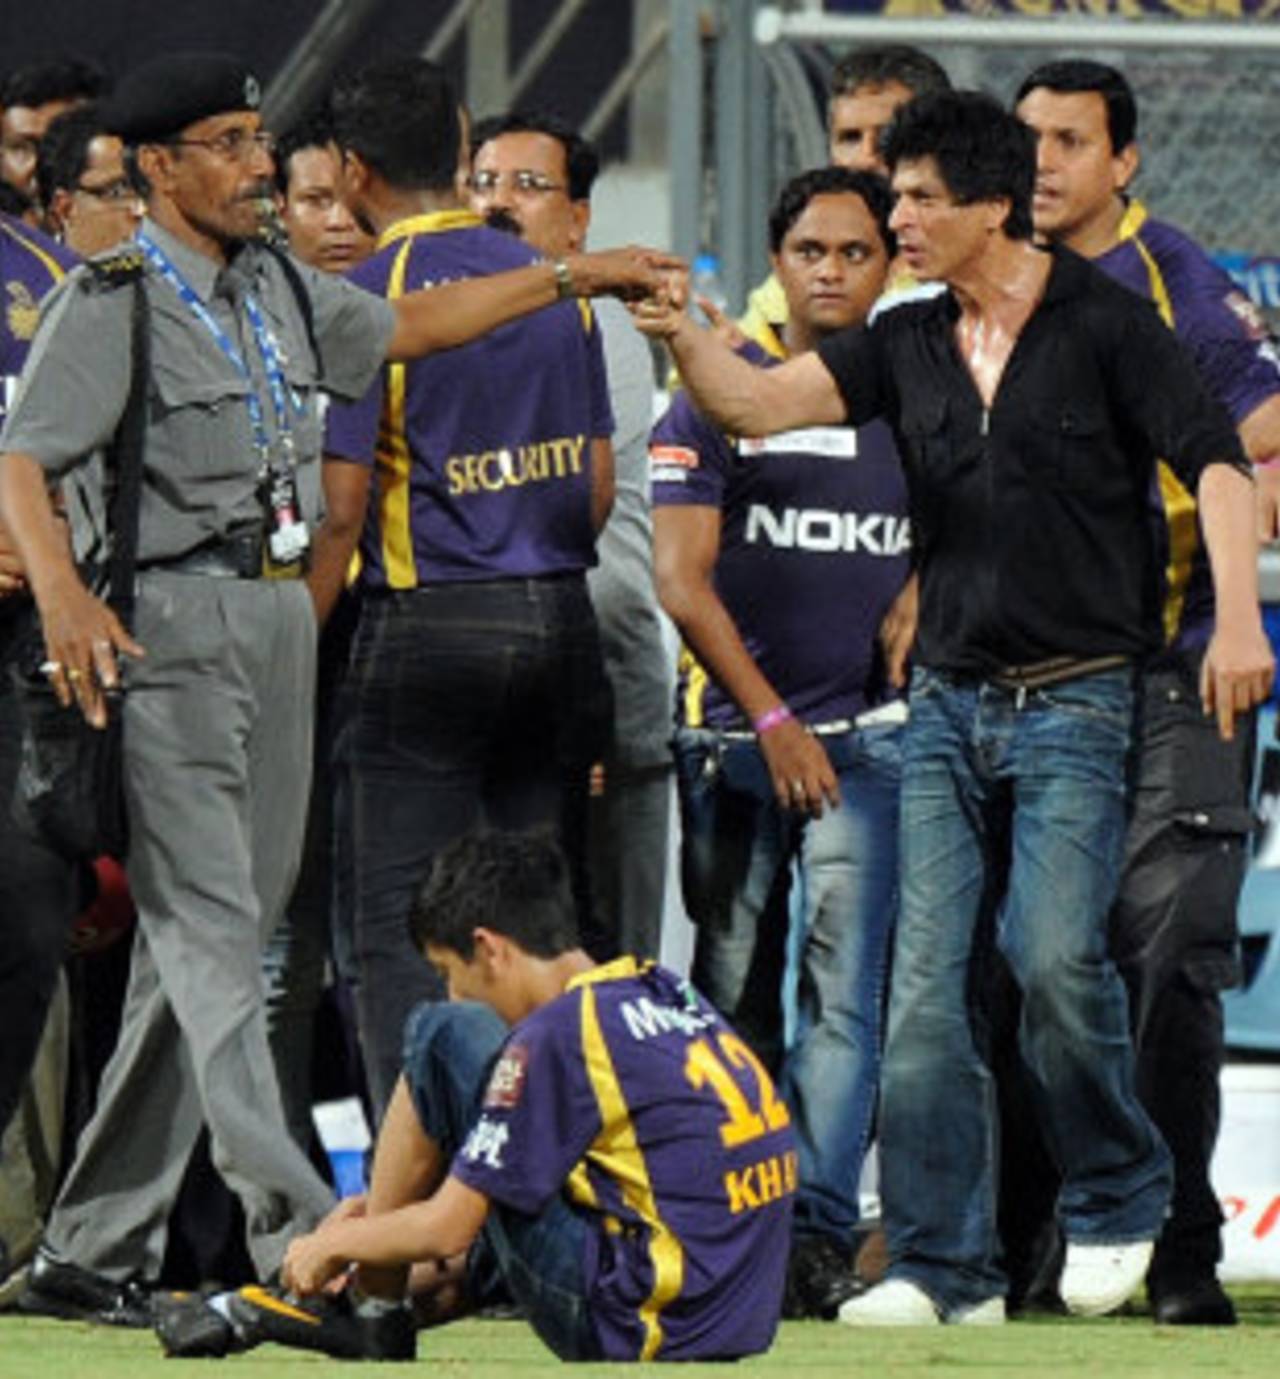 Shah Rukh Khan and security officials in an argument at the Wankhede Stadium&nbsp;&nbsp;&bull;&nbsp;&nbsp;AFP